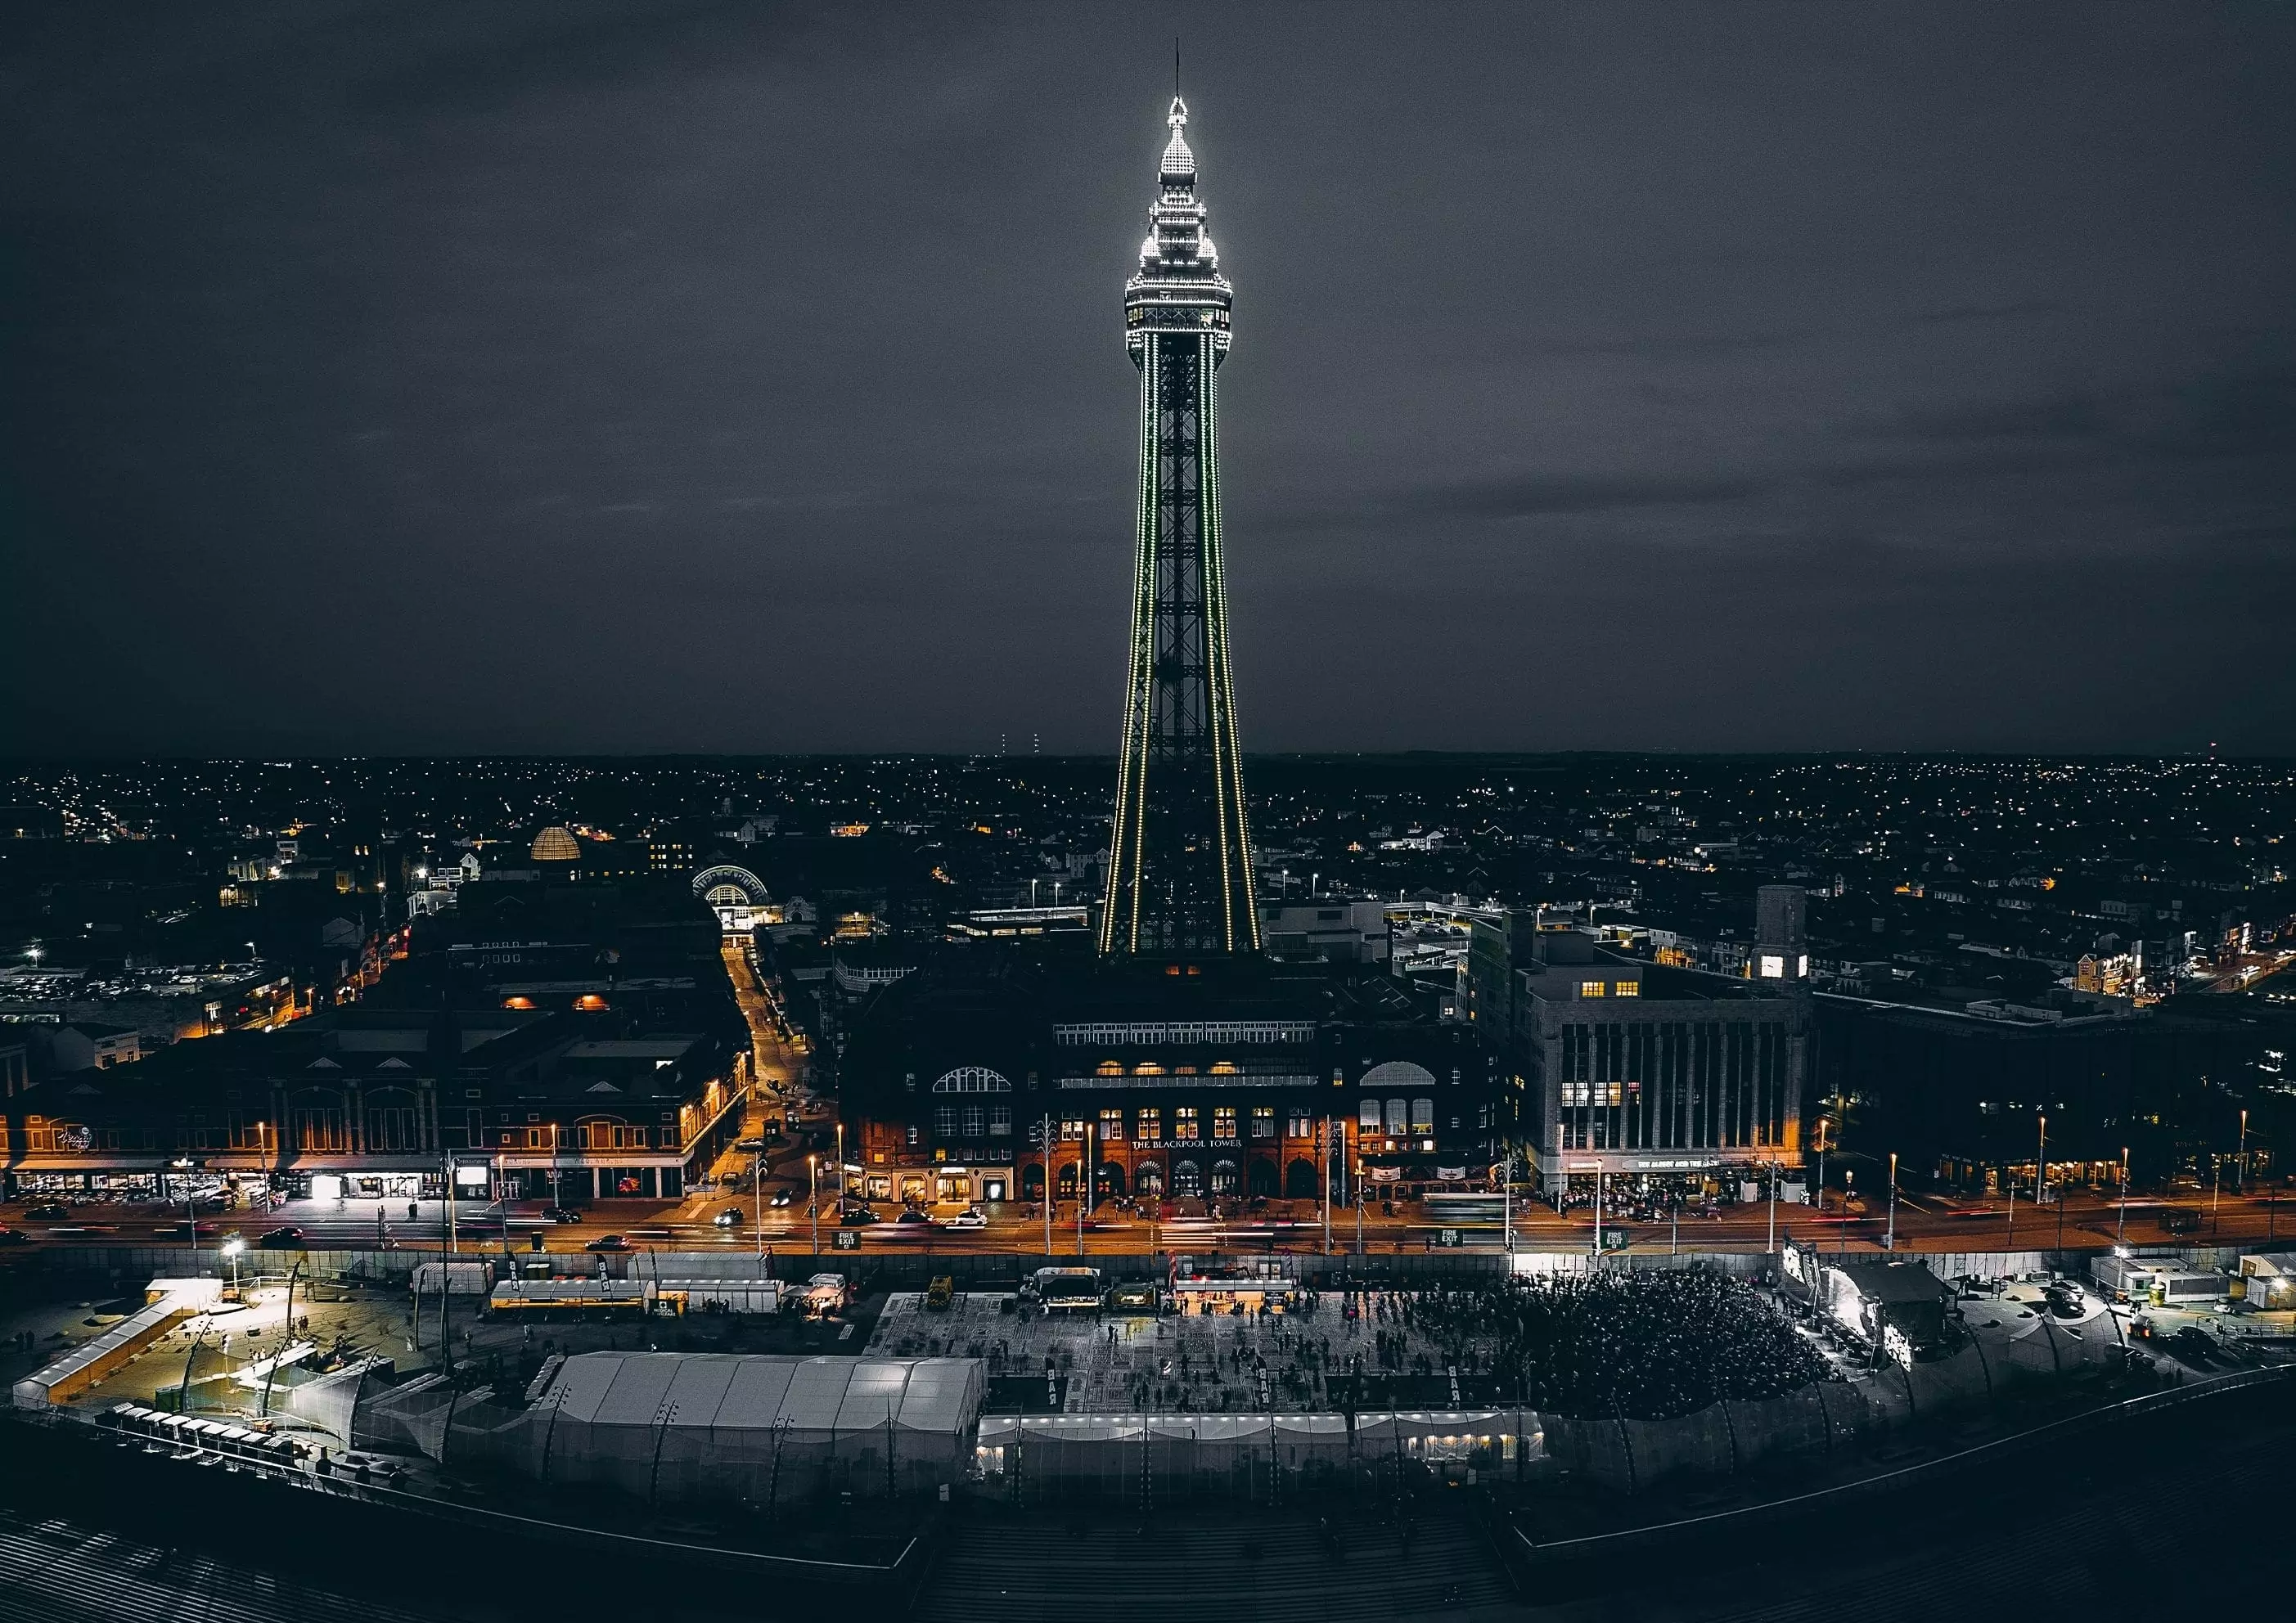 Blackpool Tower at night